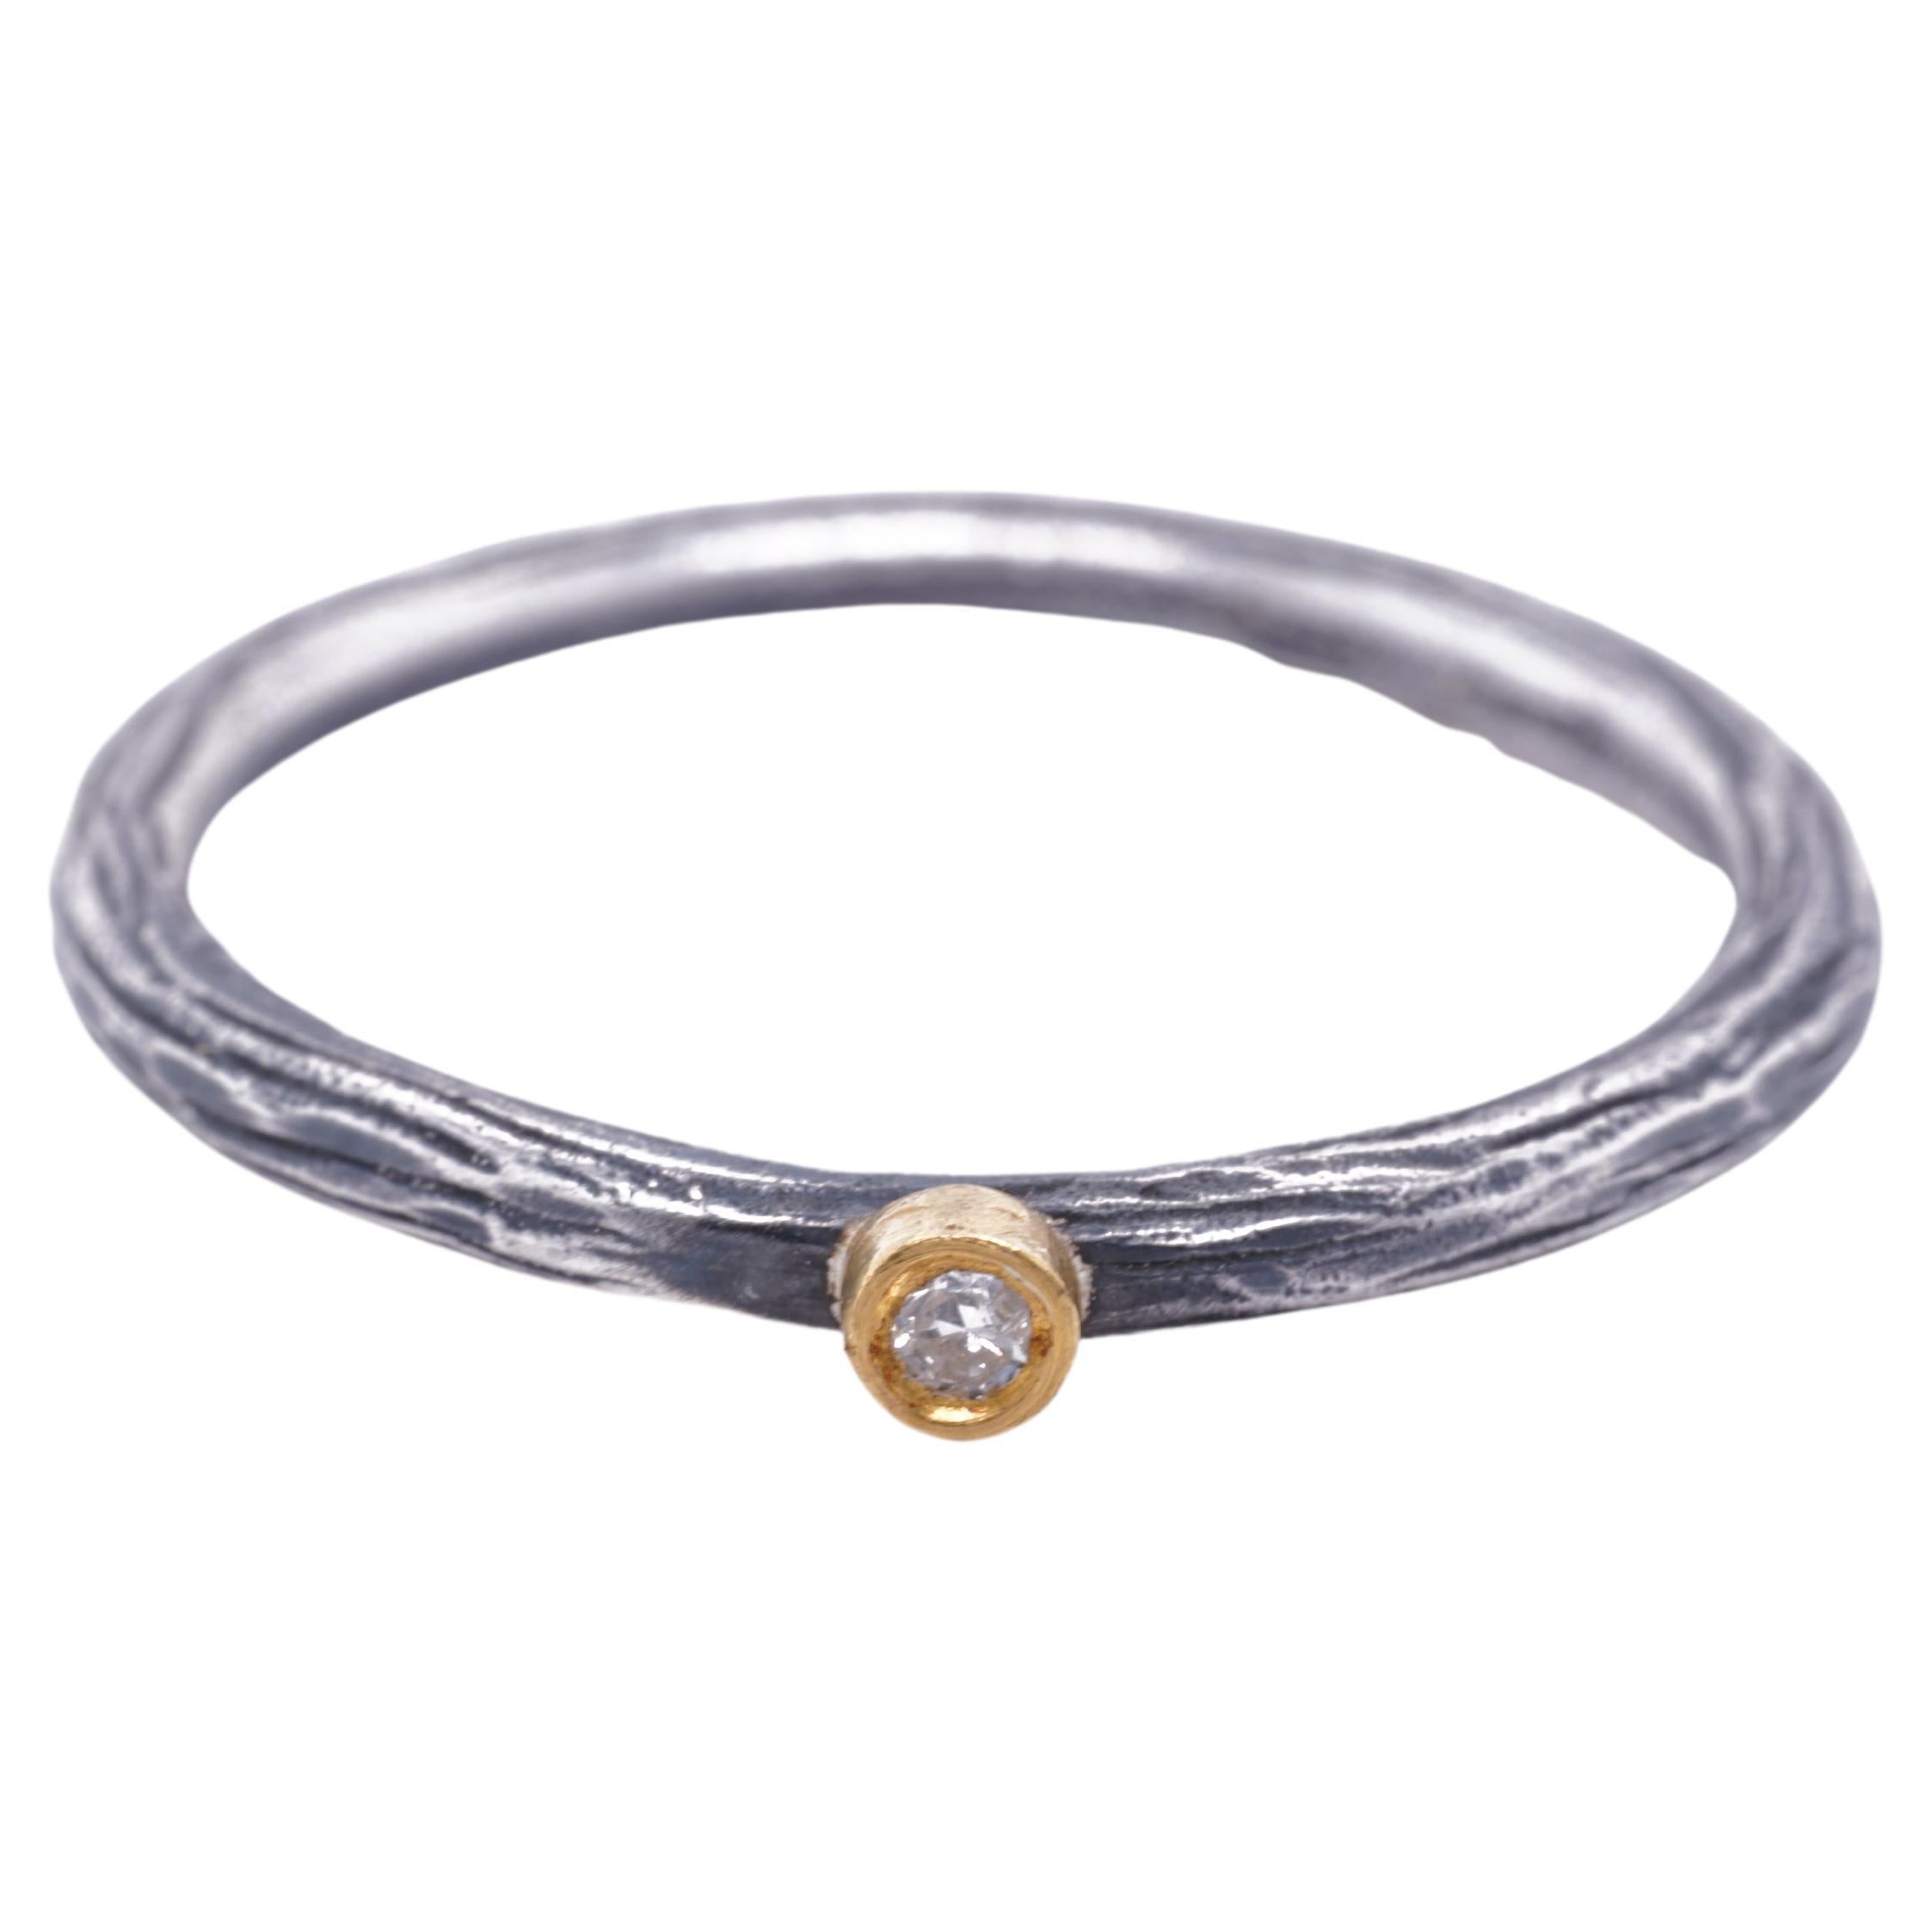 0.02 Carat, Tiny 24K Gold & Silver Stacker, Stacking Textured Ring w/ Diamond